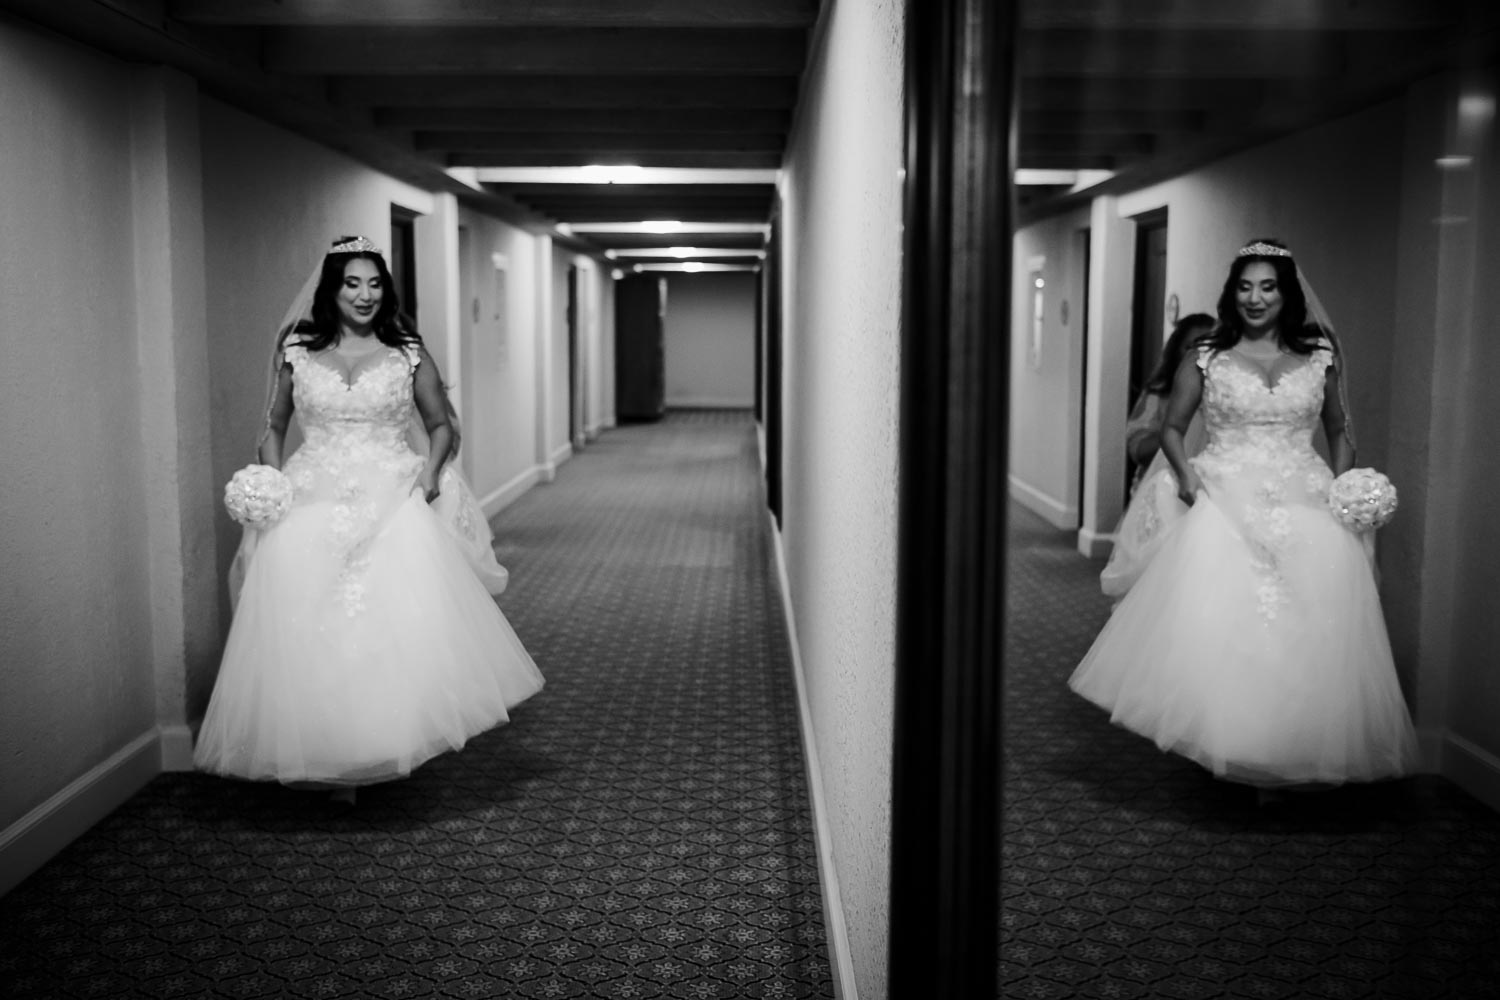 Walking down the corridors of Omni La Mansion Riverwalk hotel in San Antonio Texas the bride is reflected in a mirror